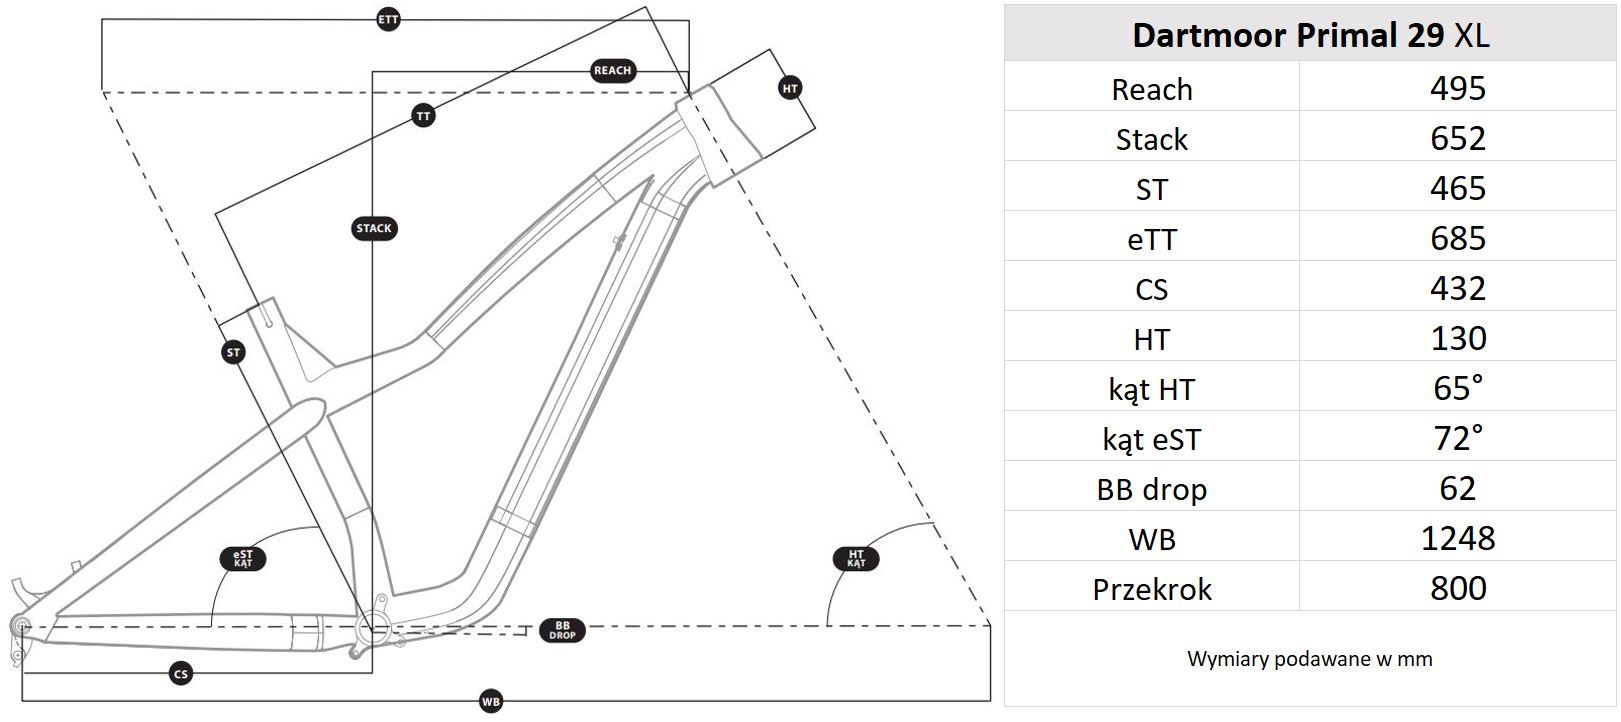 Geometria ramy Dartmoor Primal Evo 29 XL